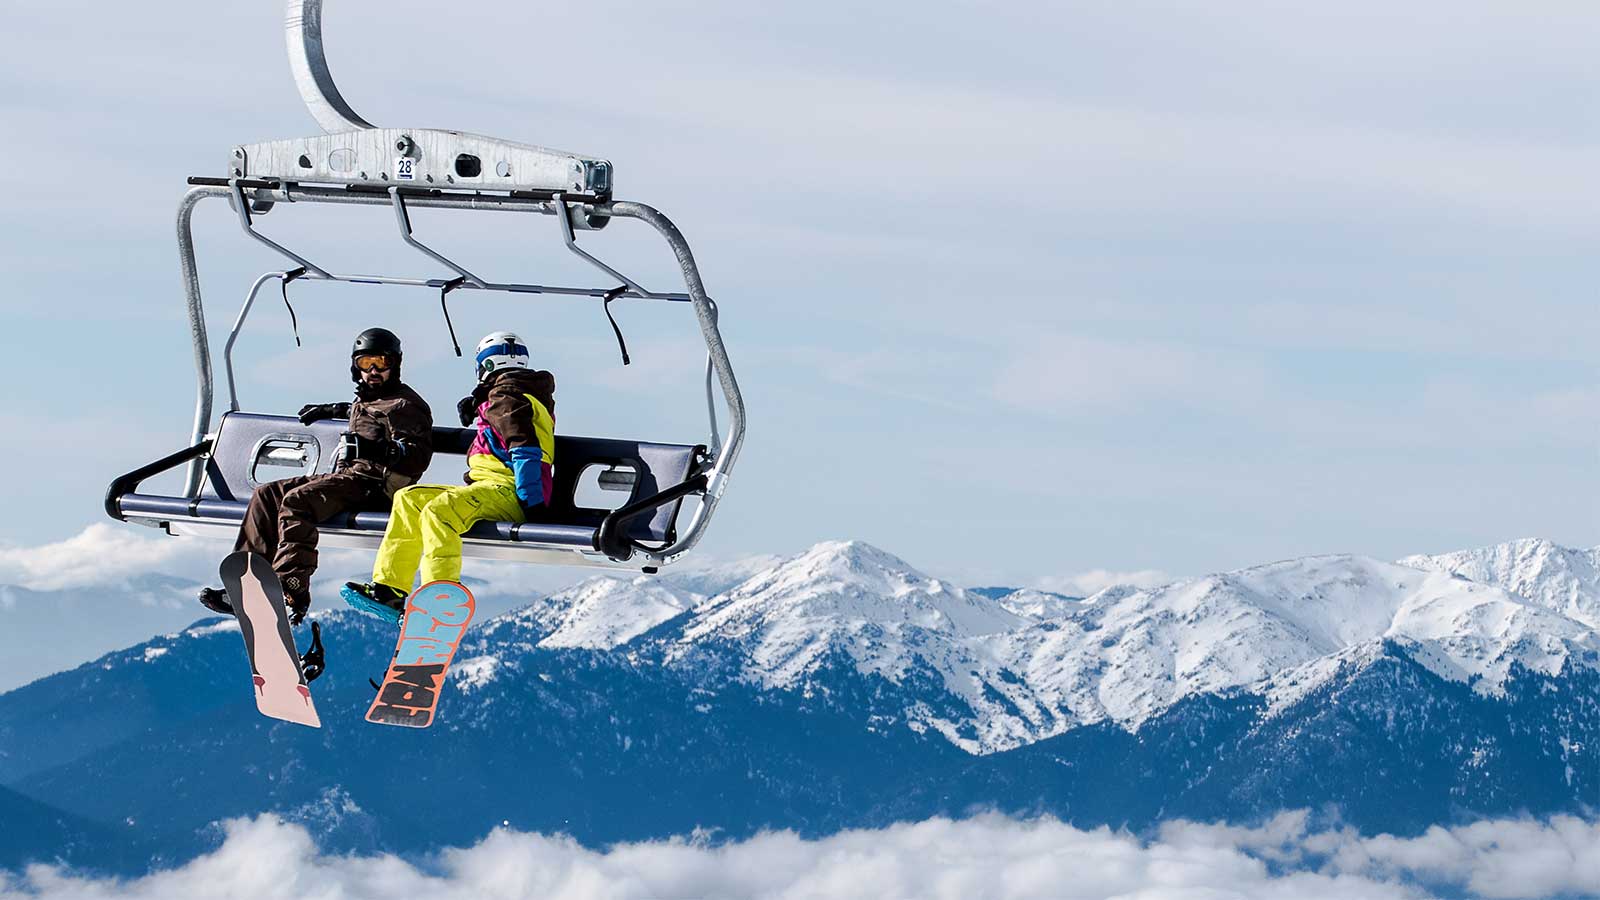 Snowboarders riding ski lift